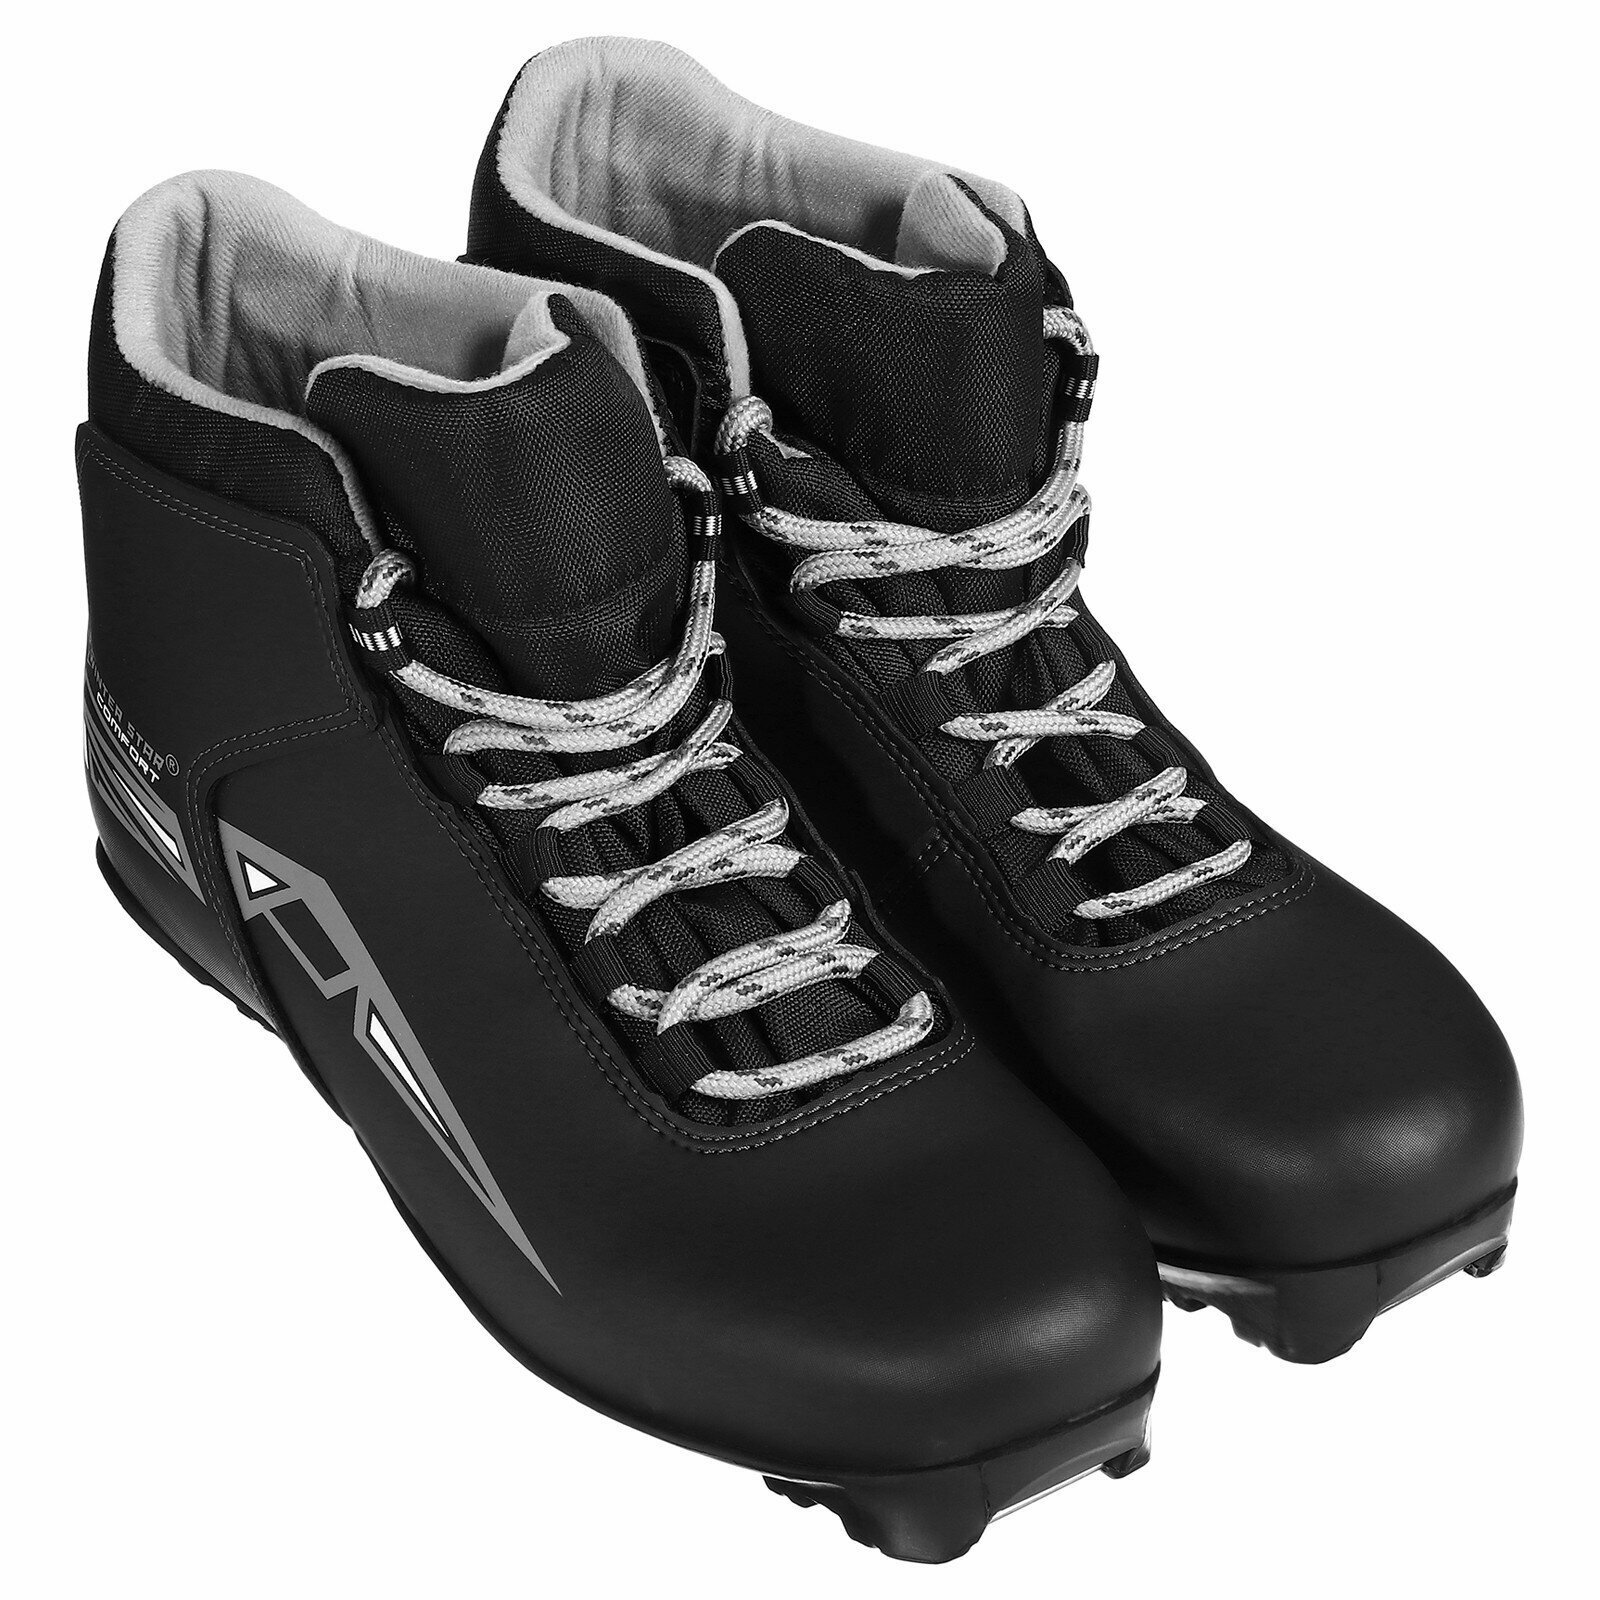 Ботинки лыжные Winter Star comfort, NNN, размер 35, цвет чёрный, серый